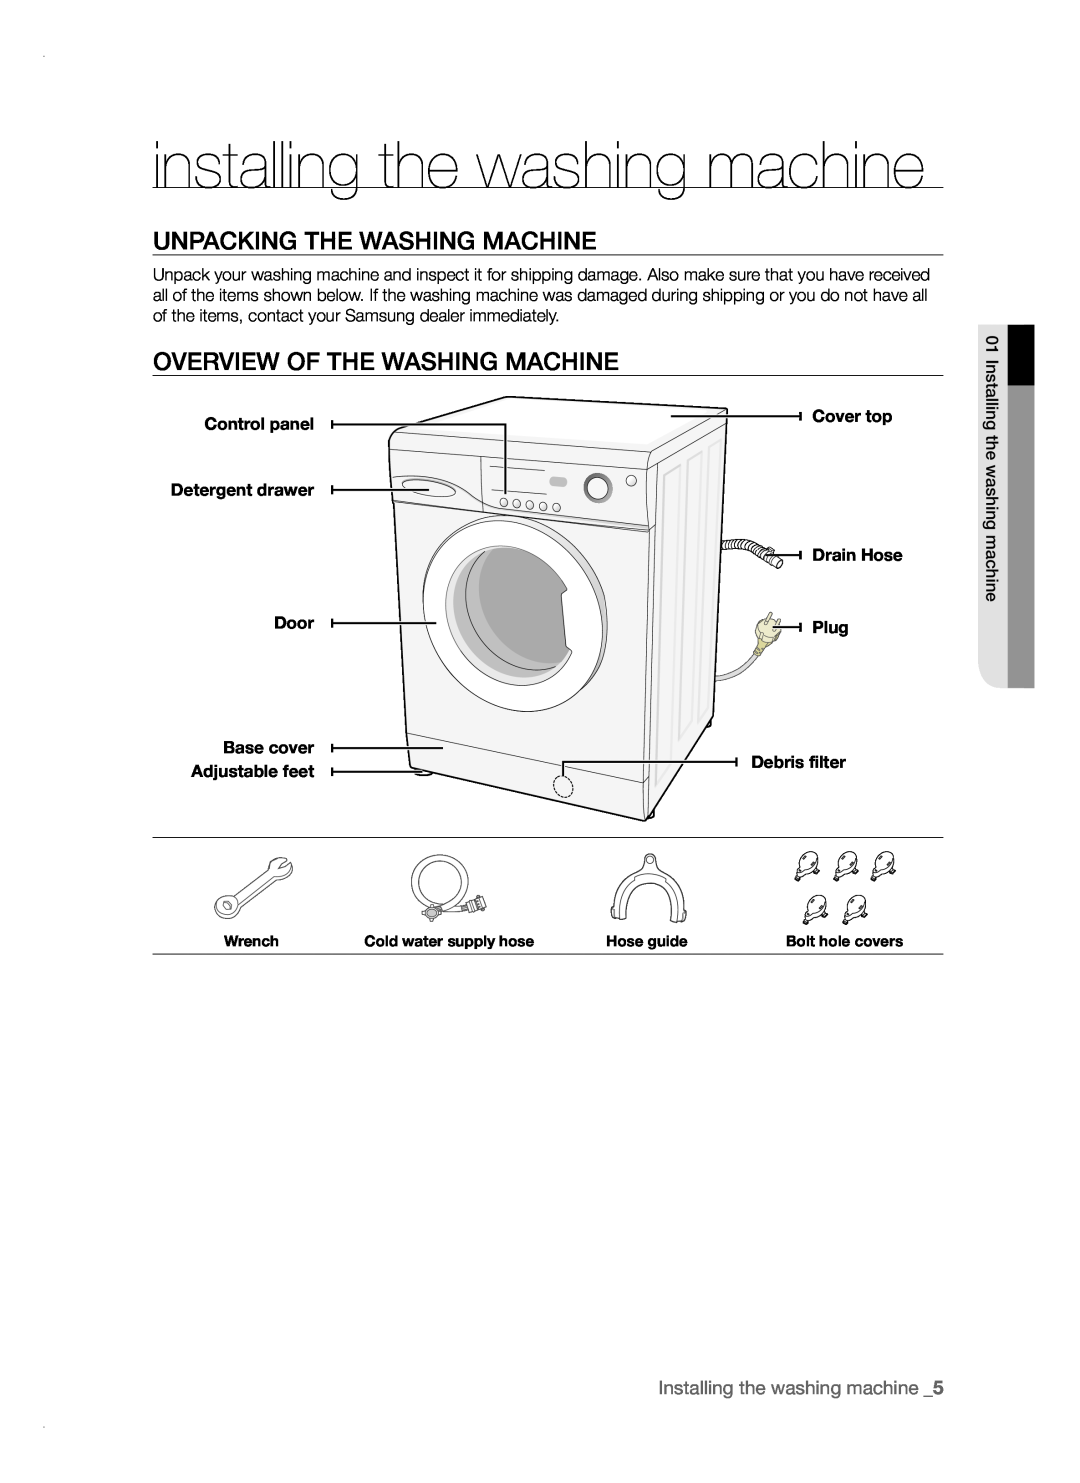 Samsung WF-B1061, WF-F1261 Unpacking The Washing Machine, Overview Of The Washing Machine, Installing the washing machine 